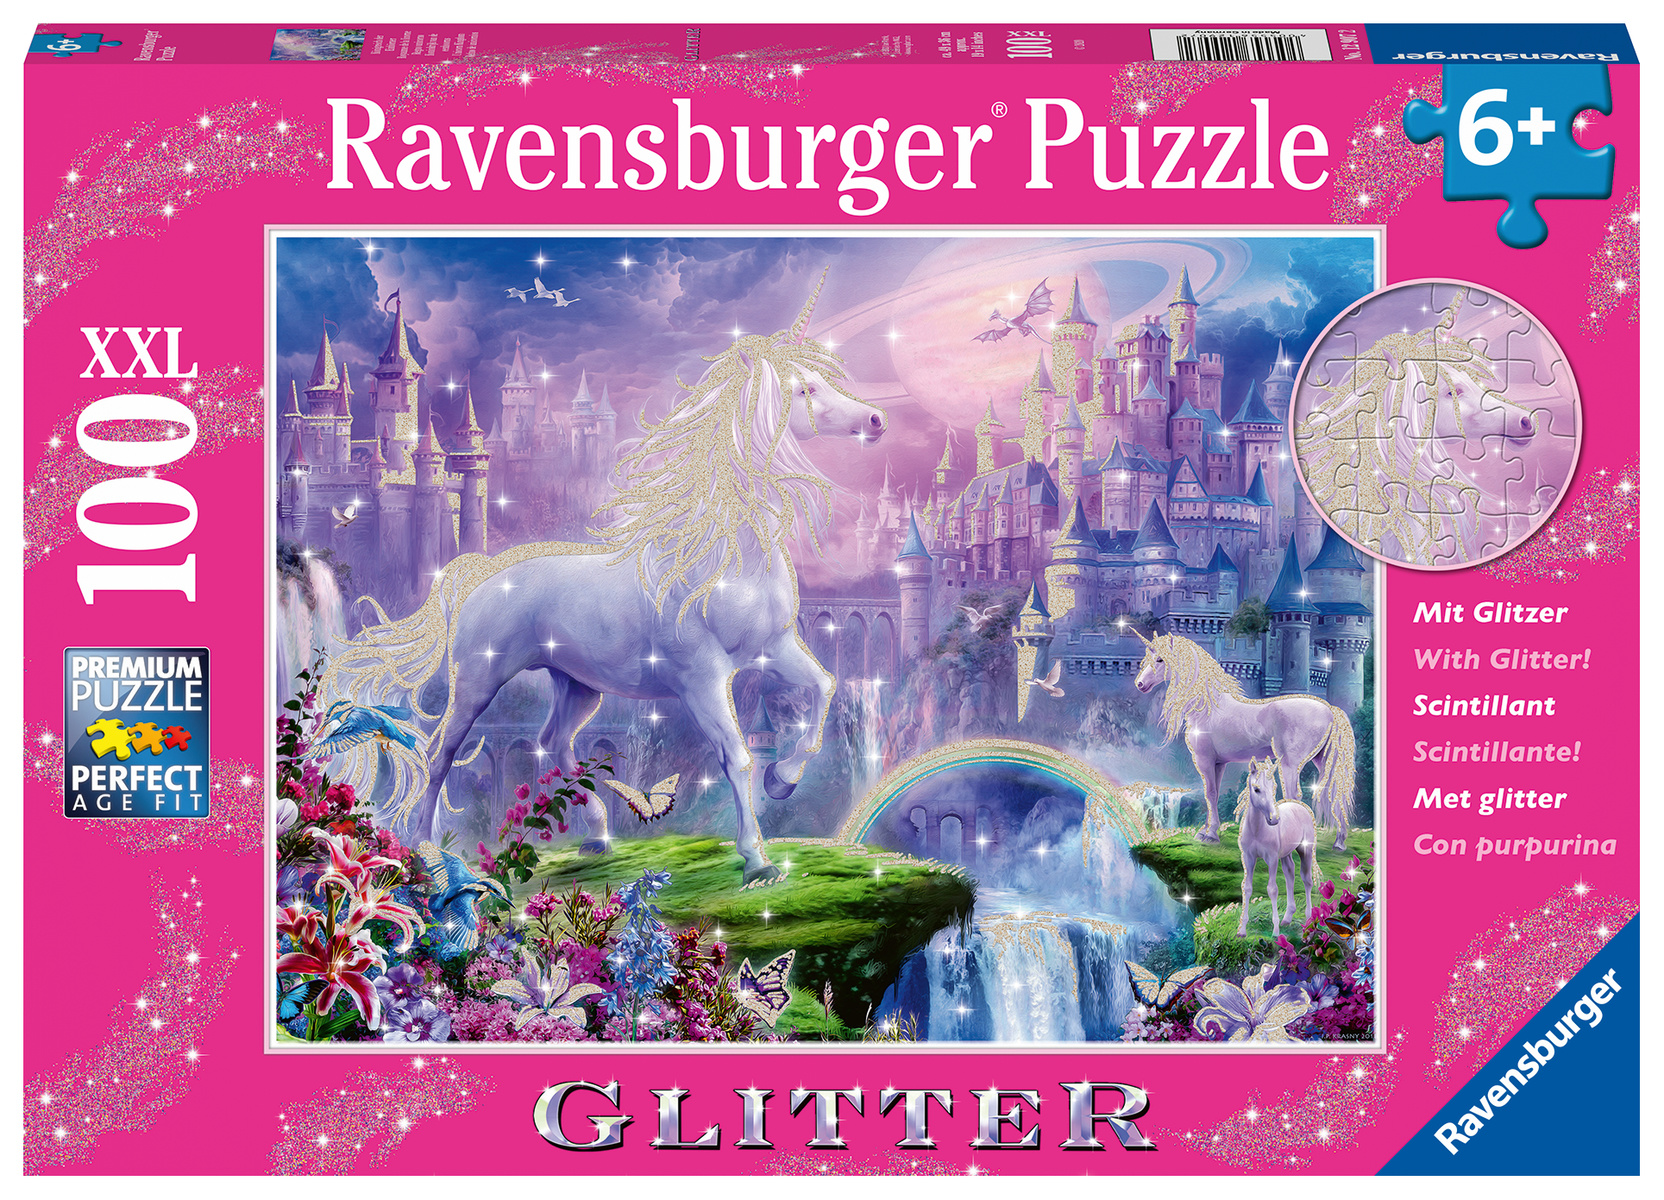 Ravensburger kinderpuzzels voordelig kopen? Brede keuze! Puzzels123